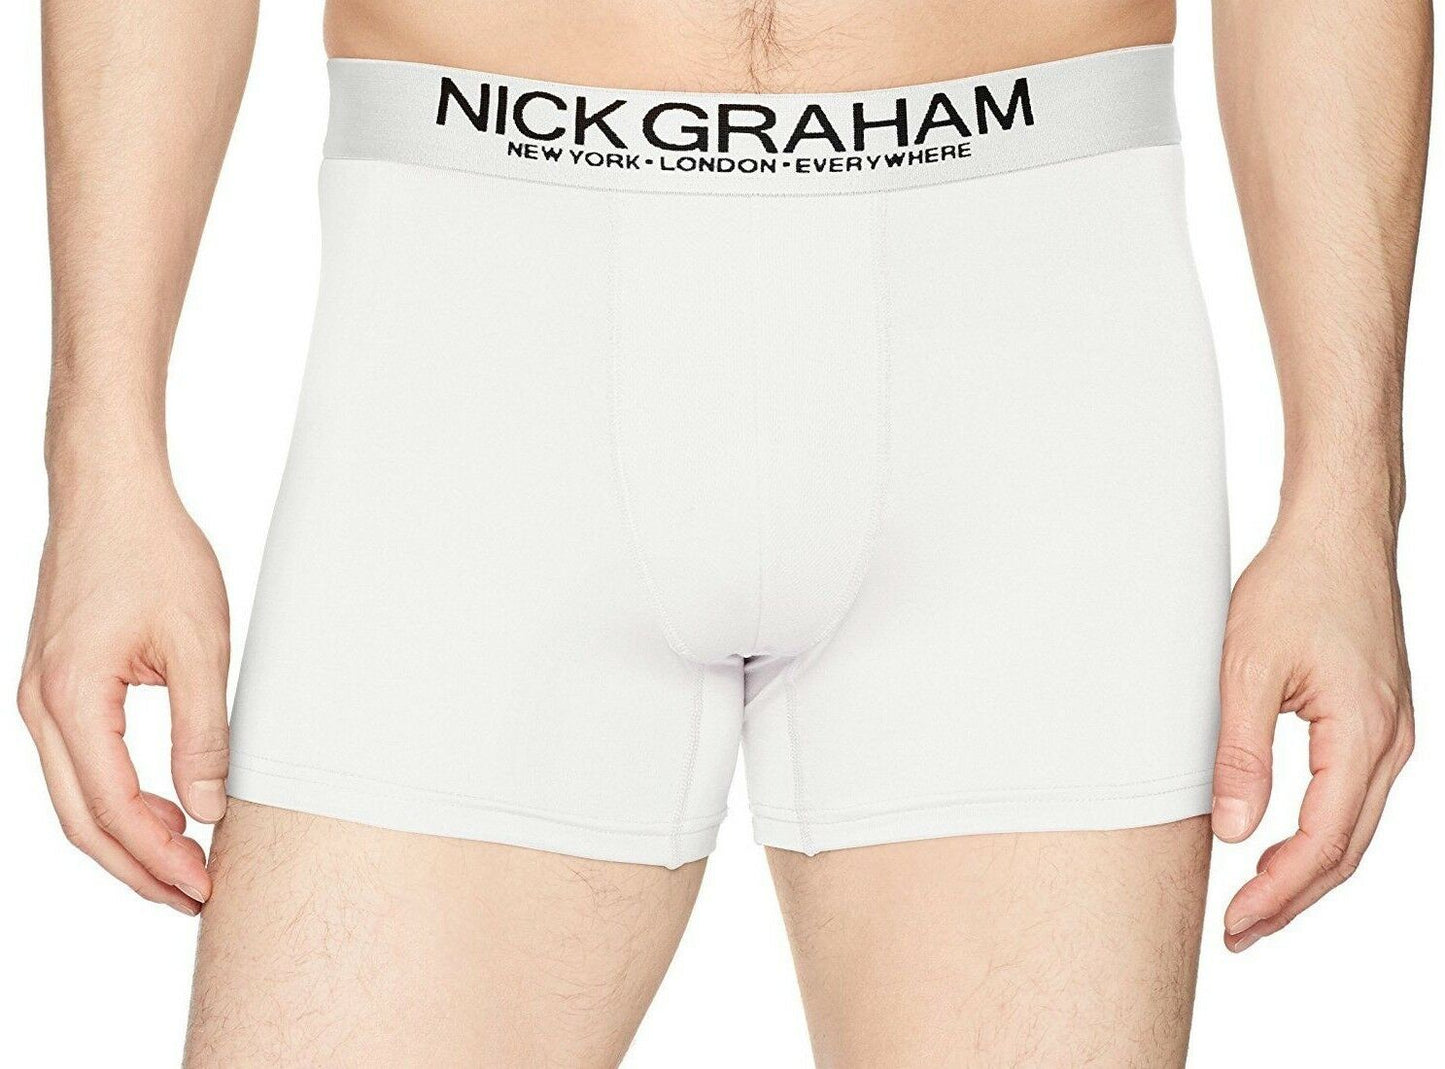 Nick Graham, Underwear & Socks